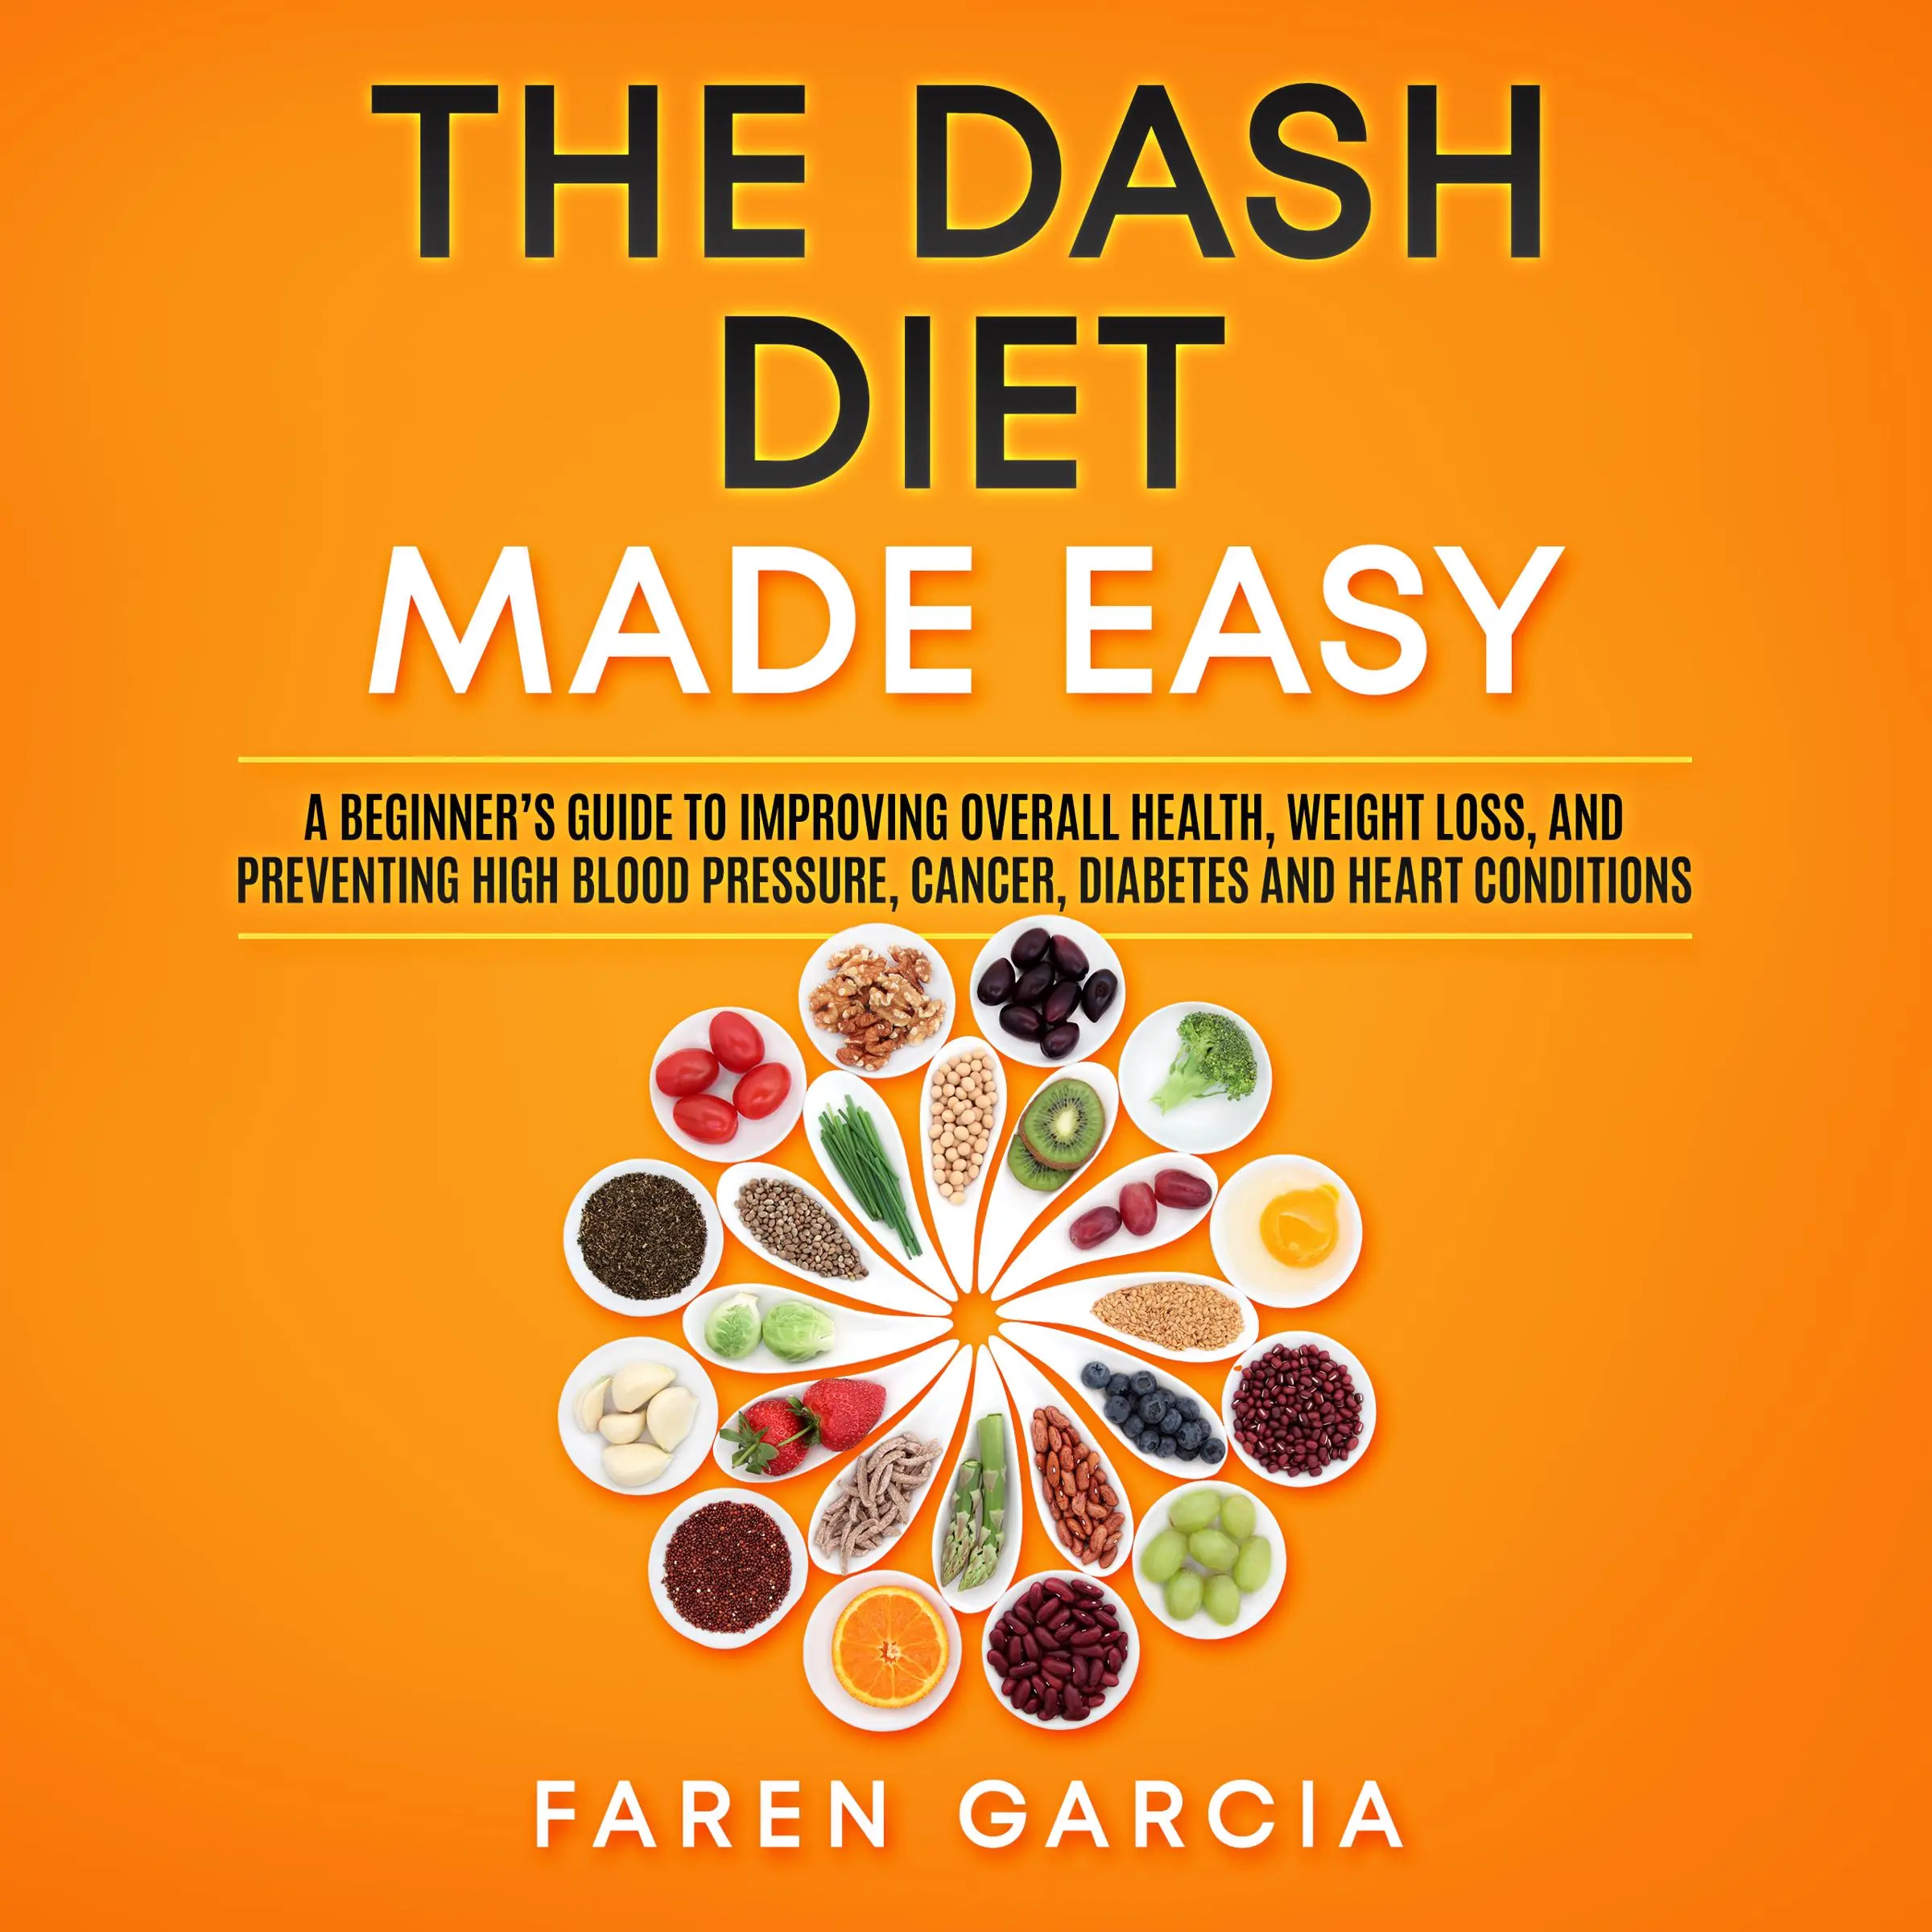 The Dash Diet Made Easy Audiobook by Faren Garcia